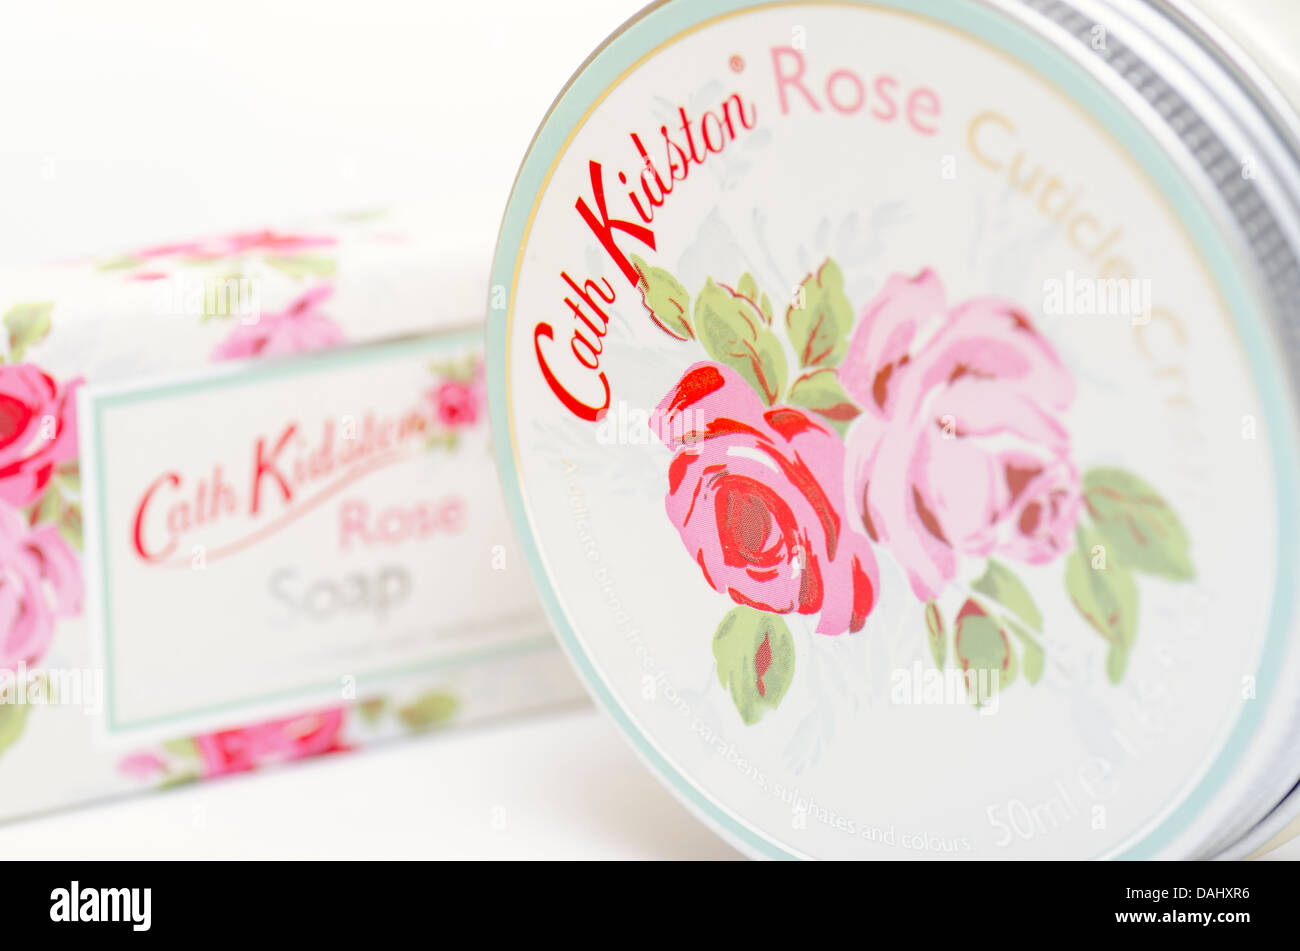 Cath Kidston rose soap and cuticle cream Stock Photo - Alamy